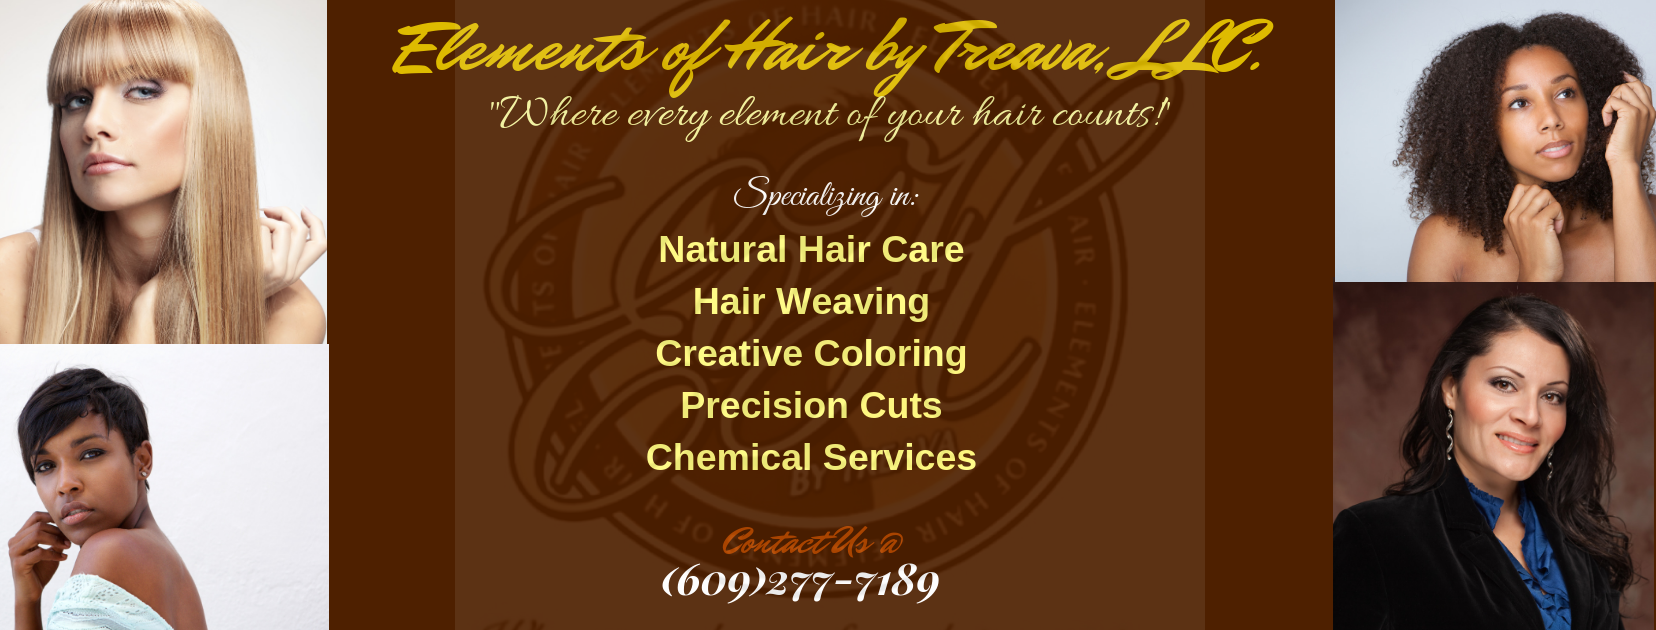 Elements of Hair by Treava, LLC.